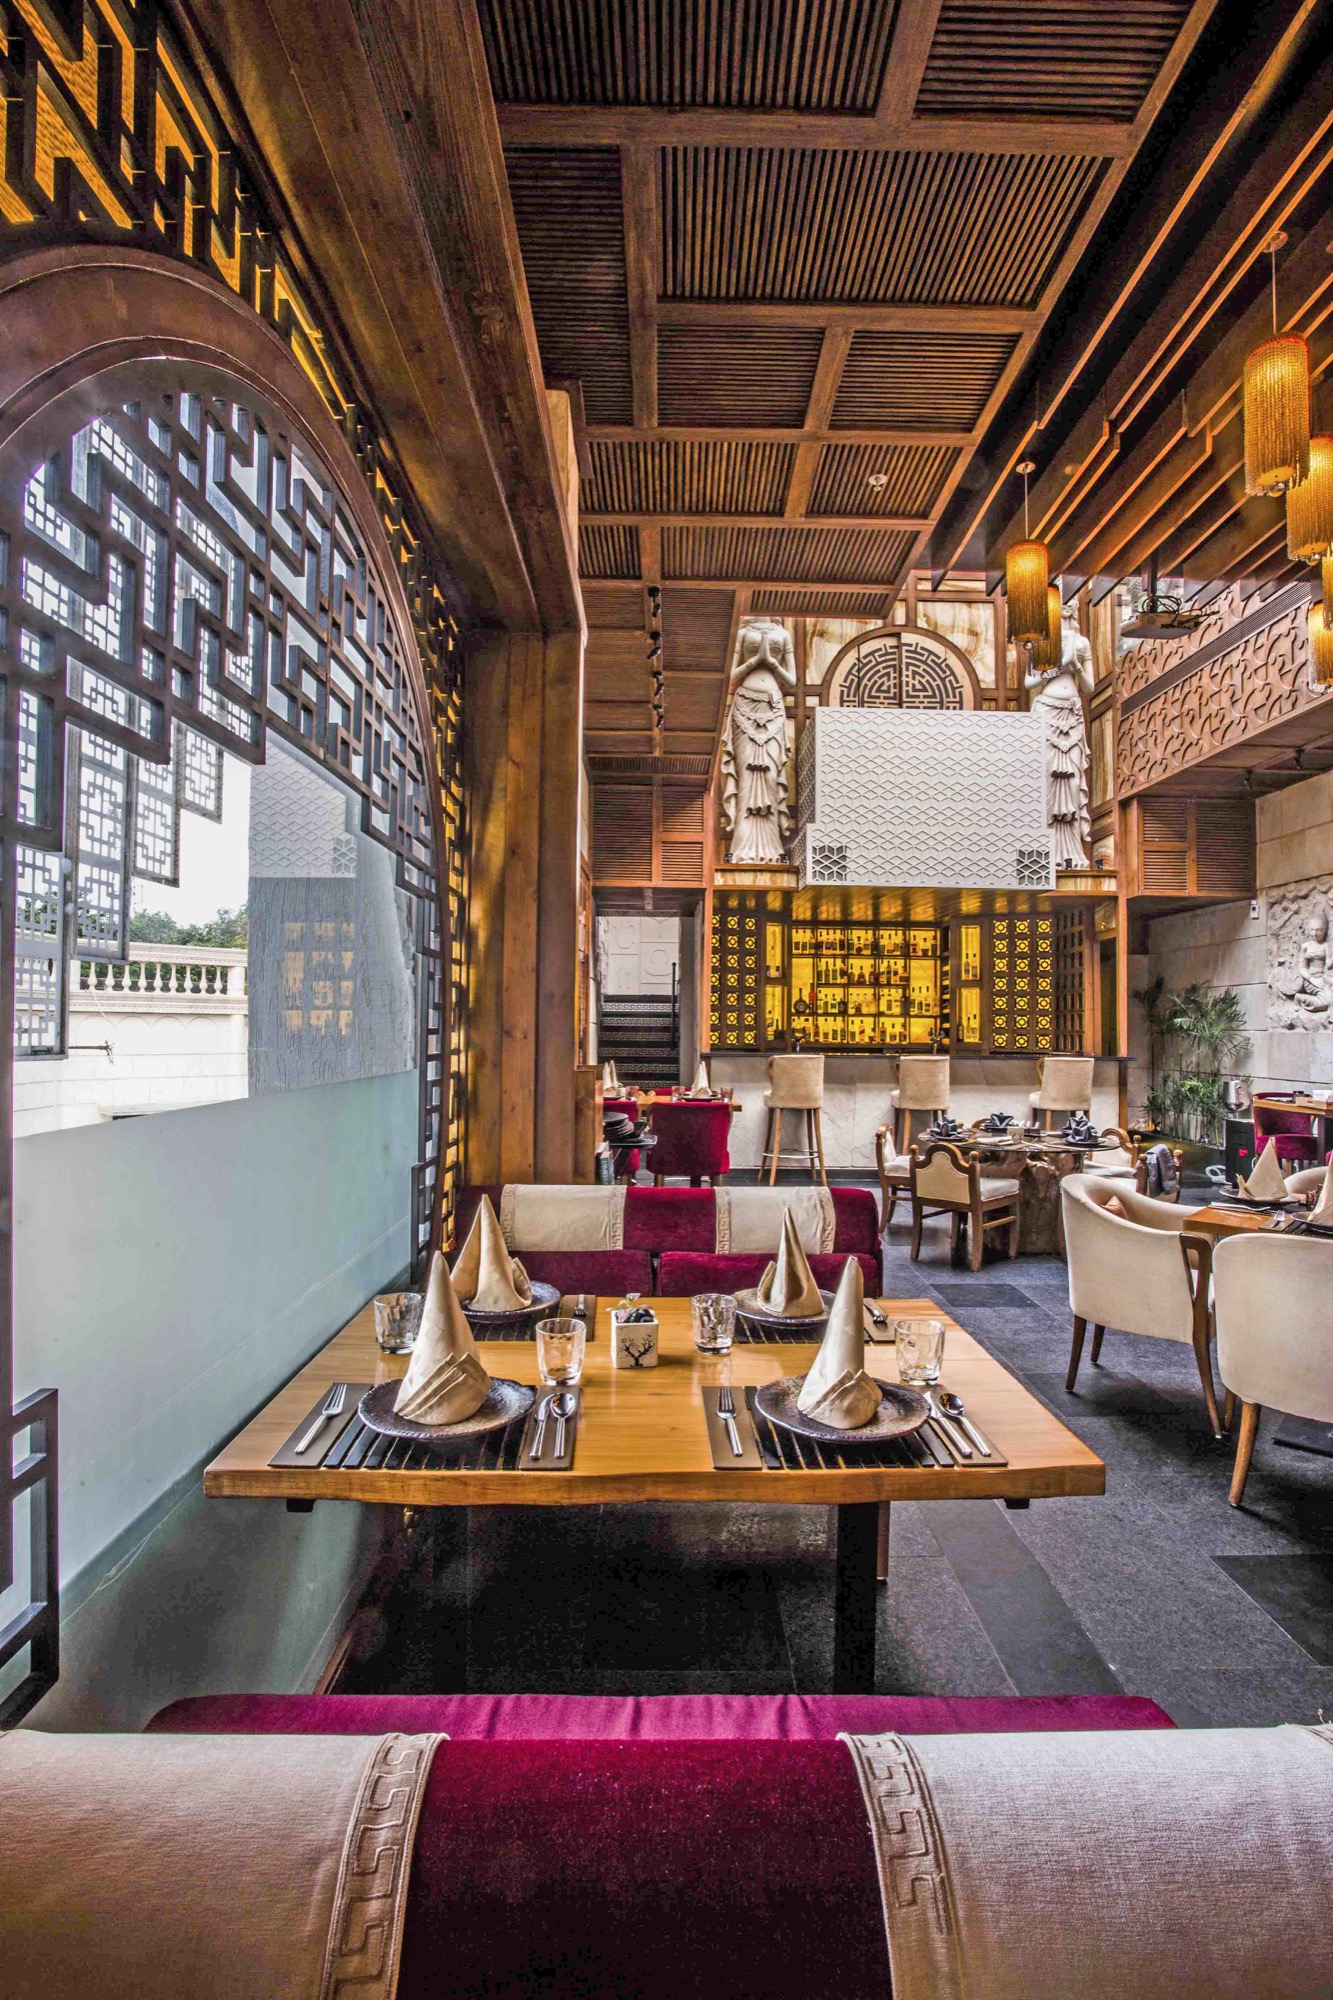 Best of Asia Village, Interior design for a restaurant at Delhi by Aspire Designs 7